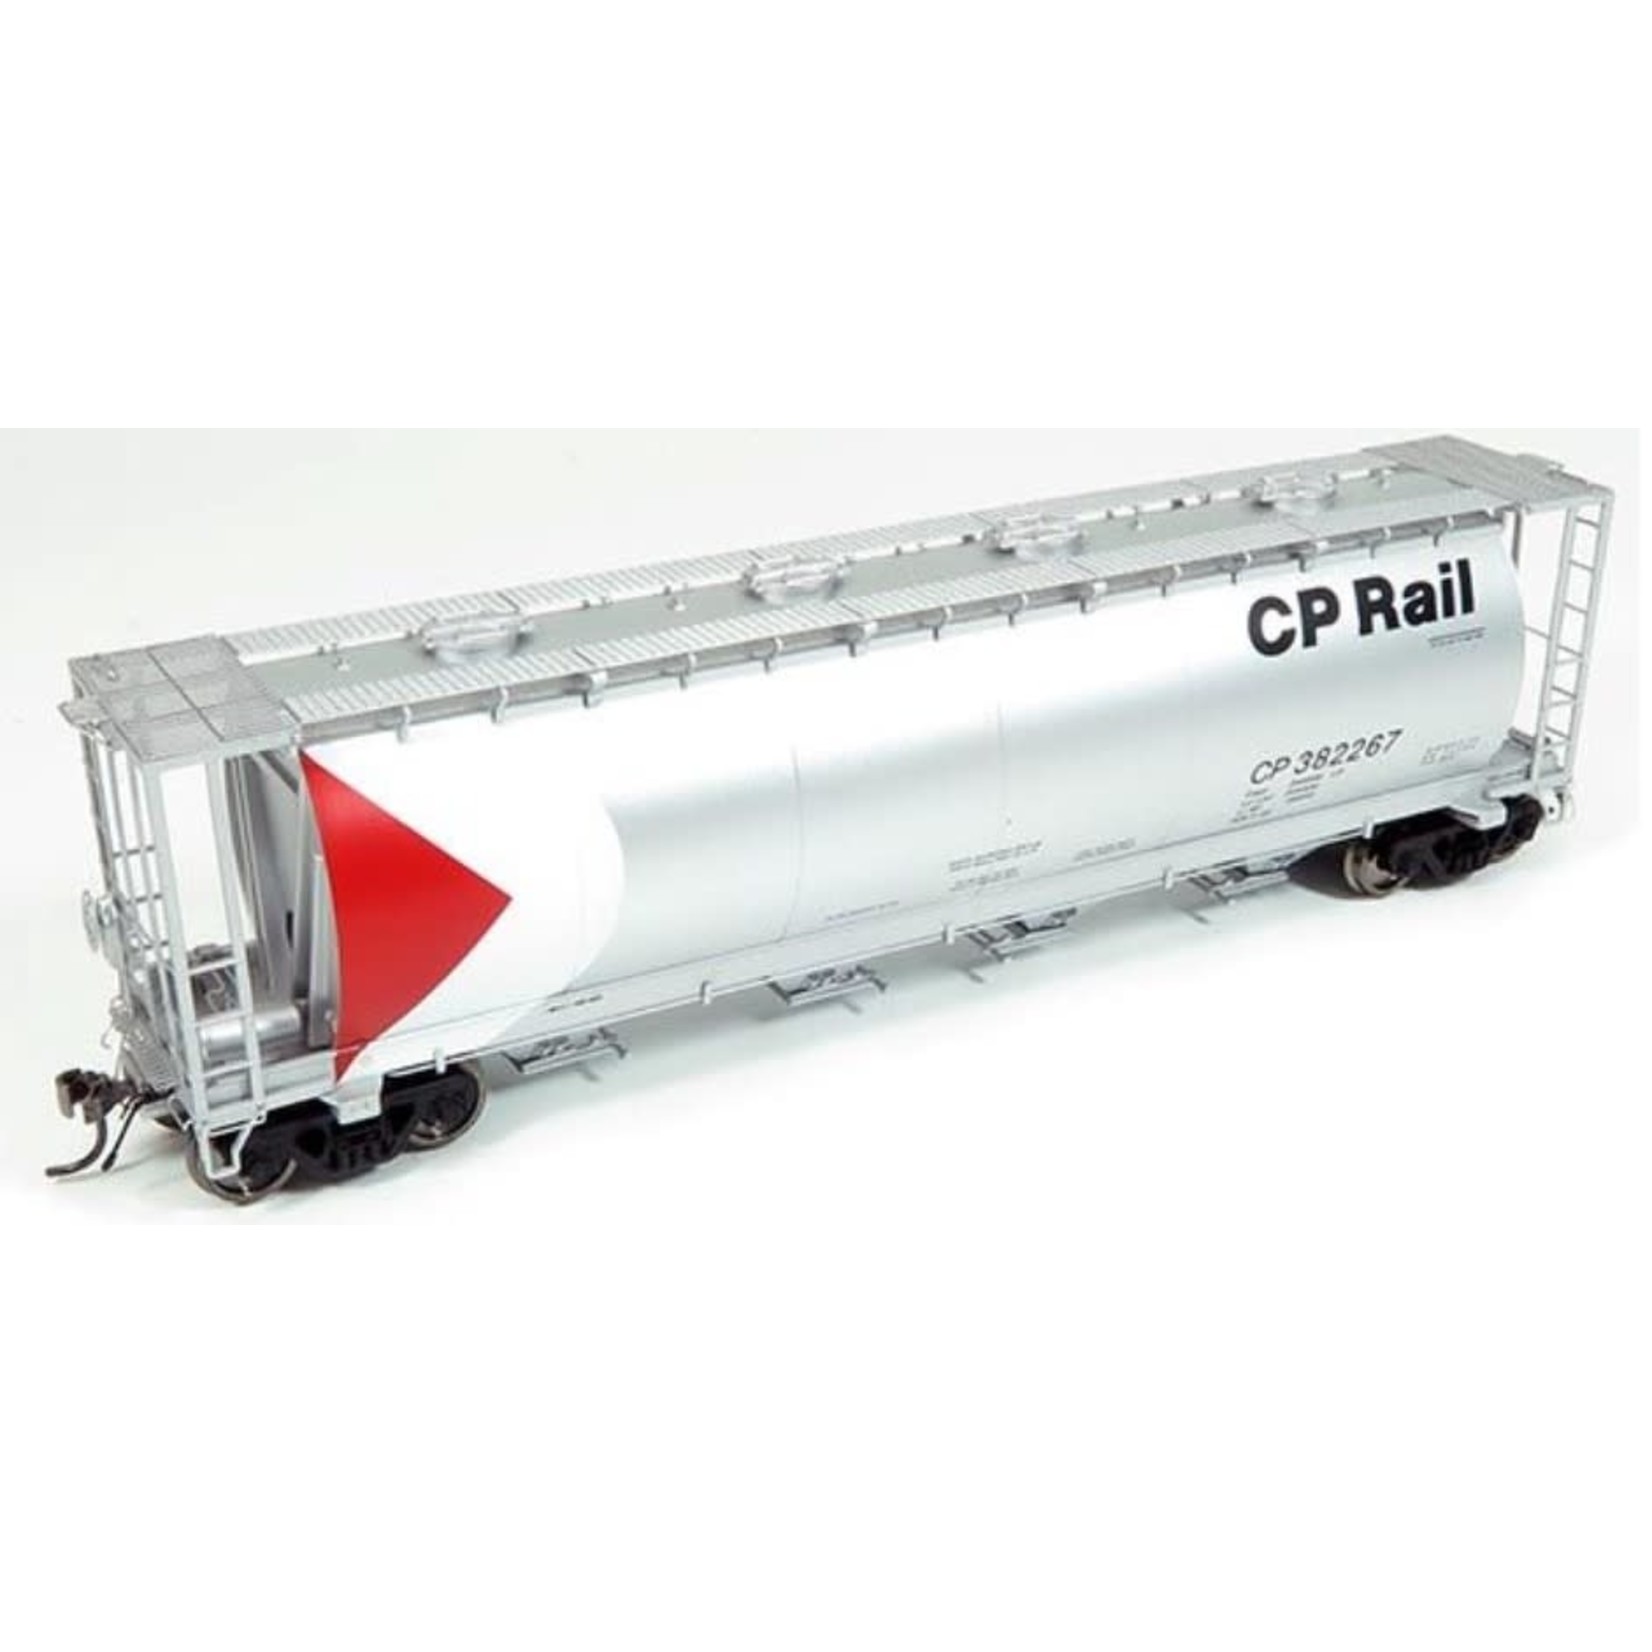 Rapido Trains HO MIL 3800cuft Covered Hopper: CP Rail - Silver Repaint